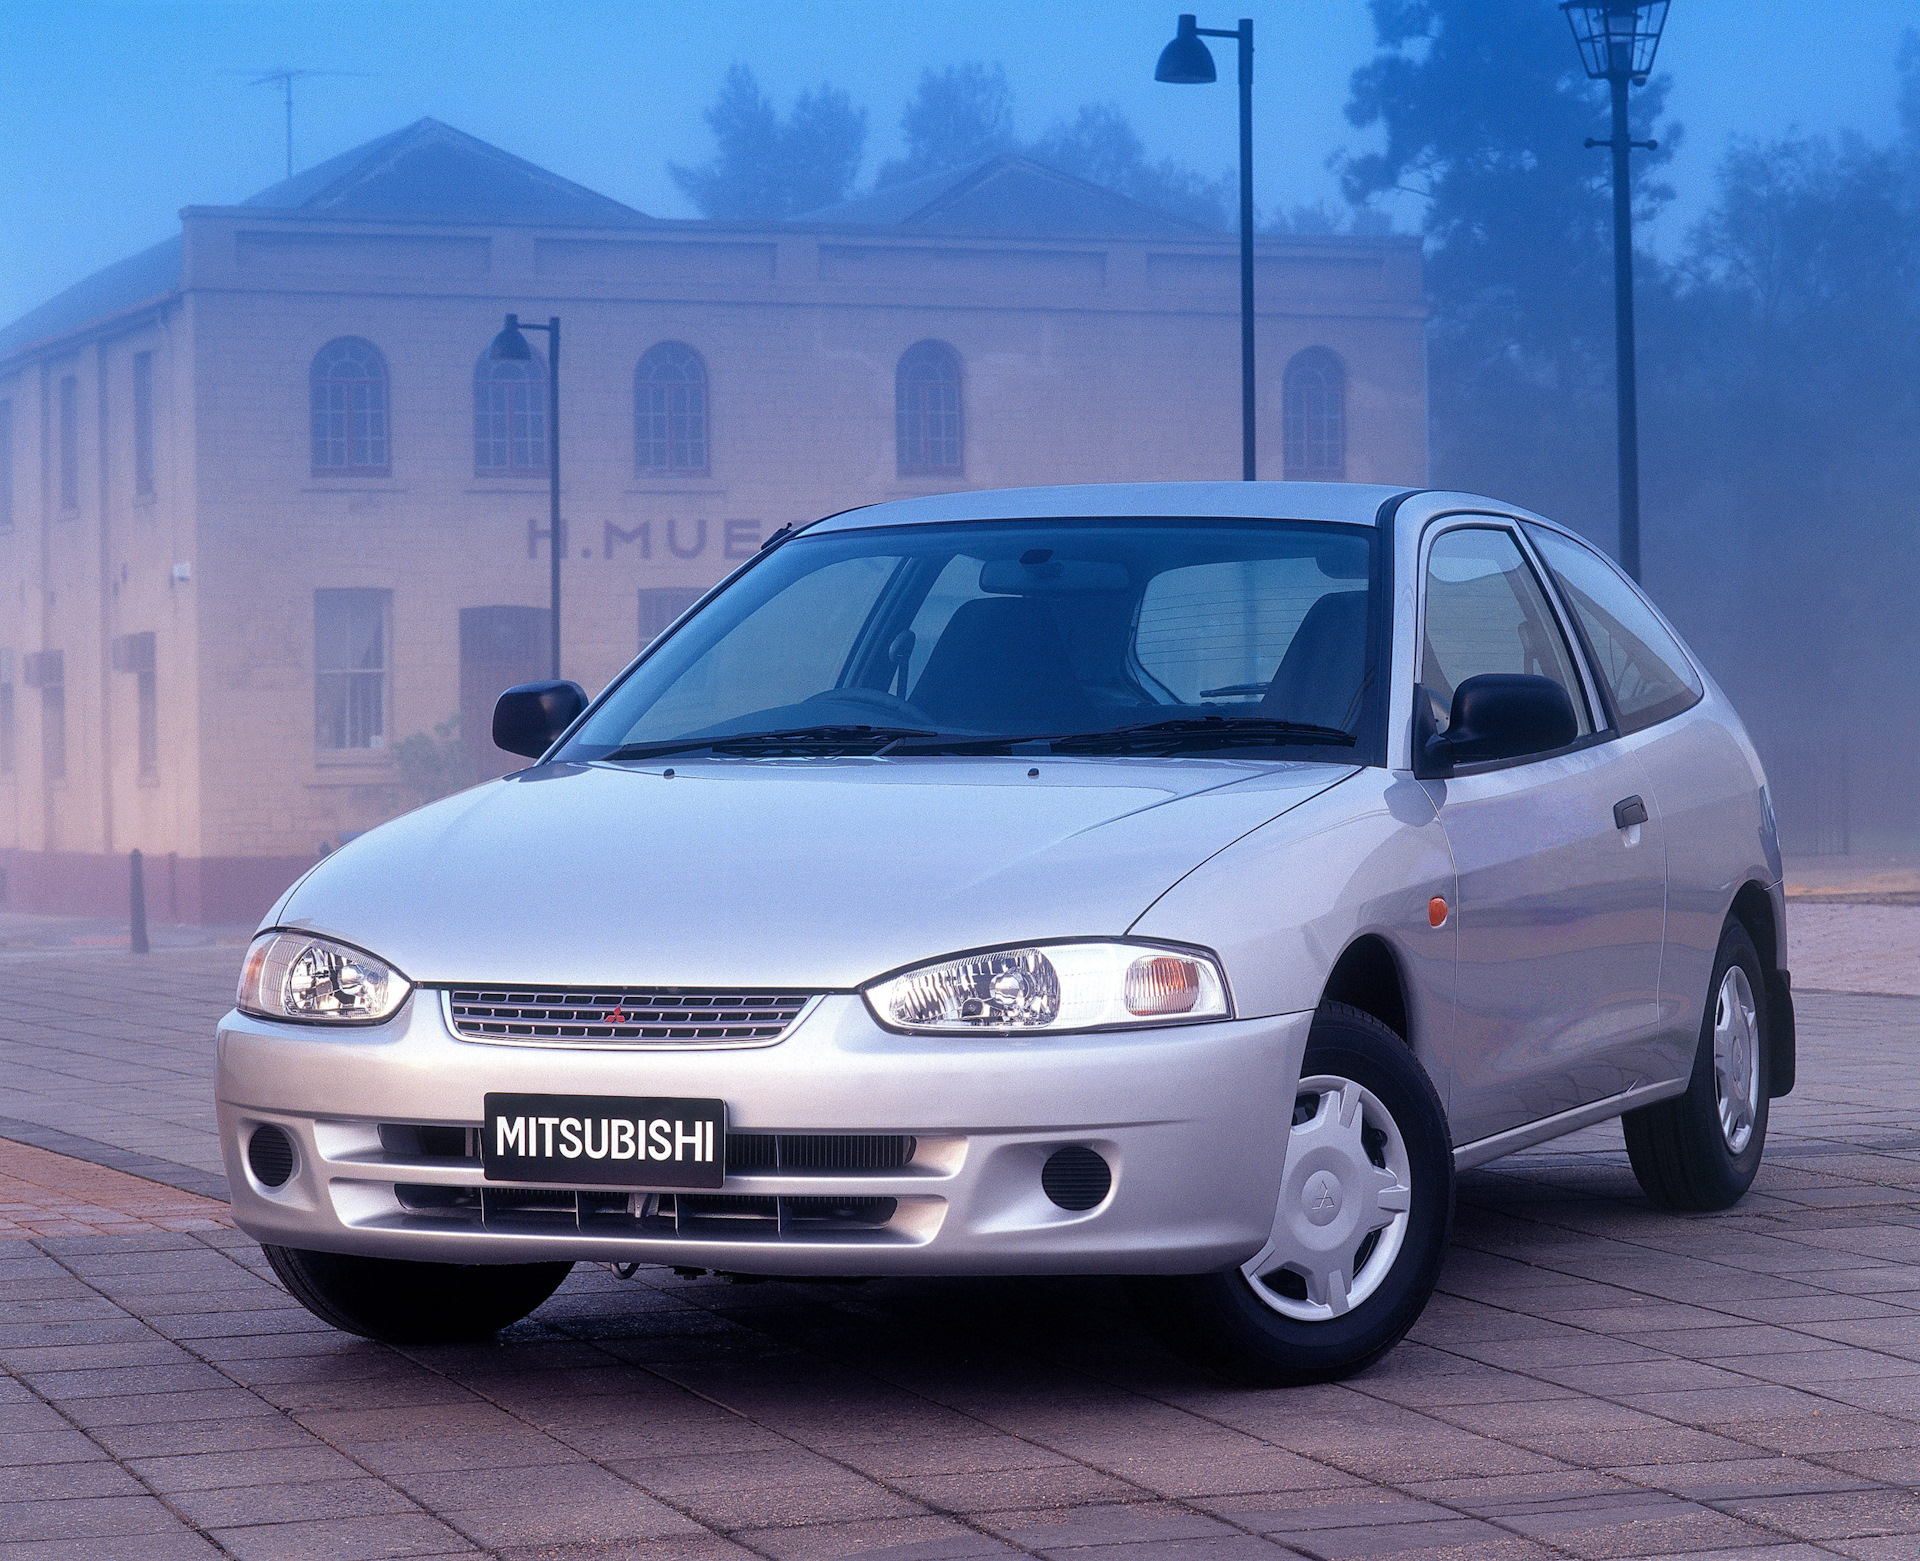 Мицубиси 2003г. Мицубиси Мираж 2003. Mitsubishi Mirage 1995-2003. Mitsubishi Mirage 1995 Hatchback. Митсубиси Мираж 2004.